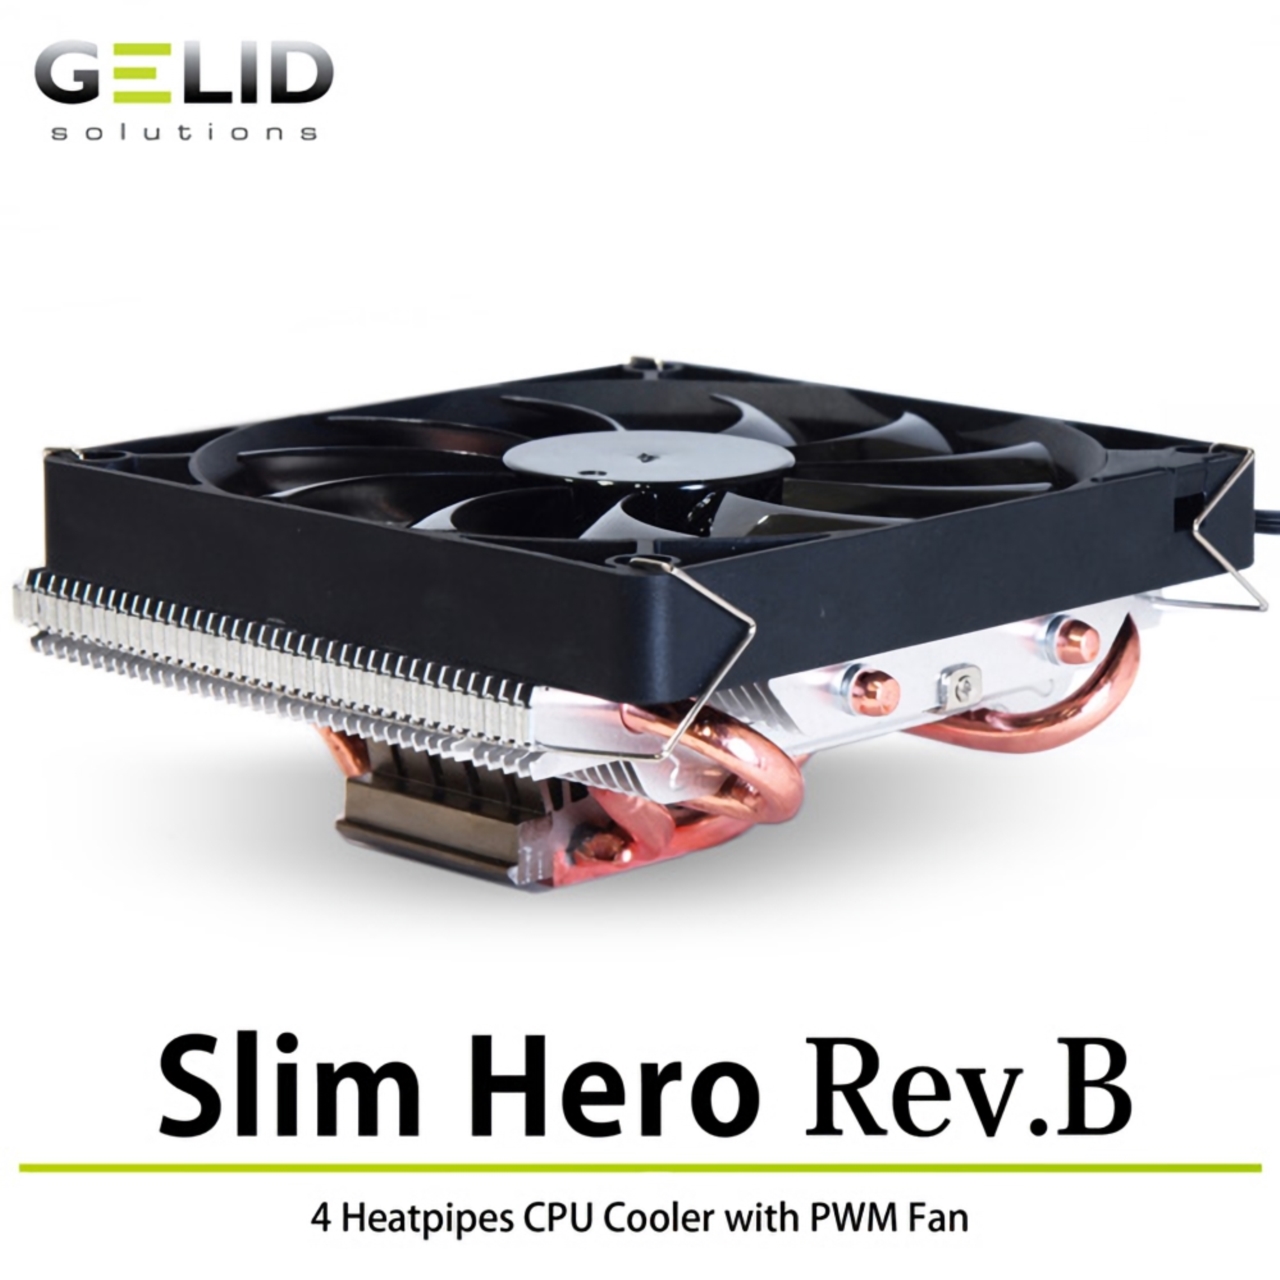 Slim Hero Rev B Cc Shero 01 B Gelid Cpuクーラー Cpuクーラー 冷却パーツ Pcパーツと自作パソコン 組み立てパソコンの専門店 1 S Pcワンズ